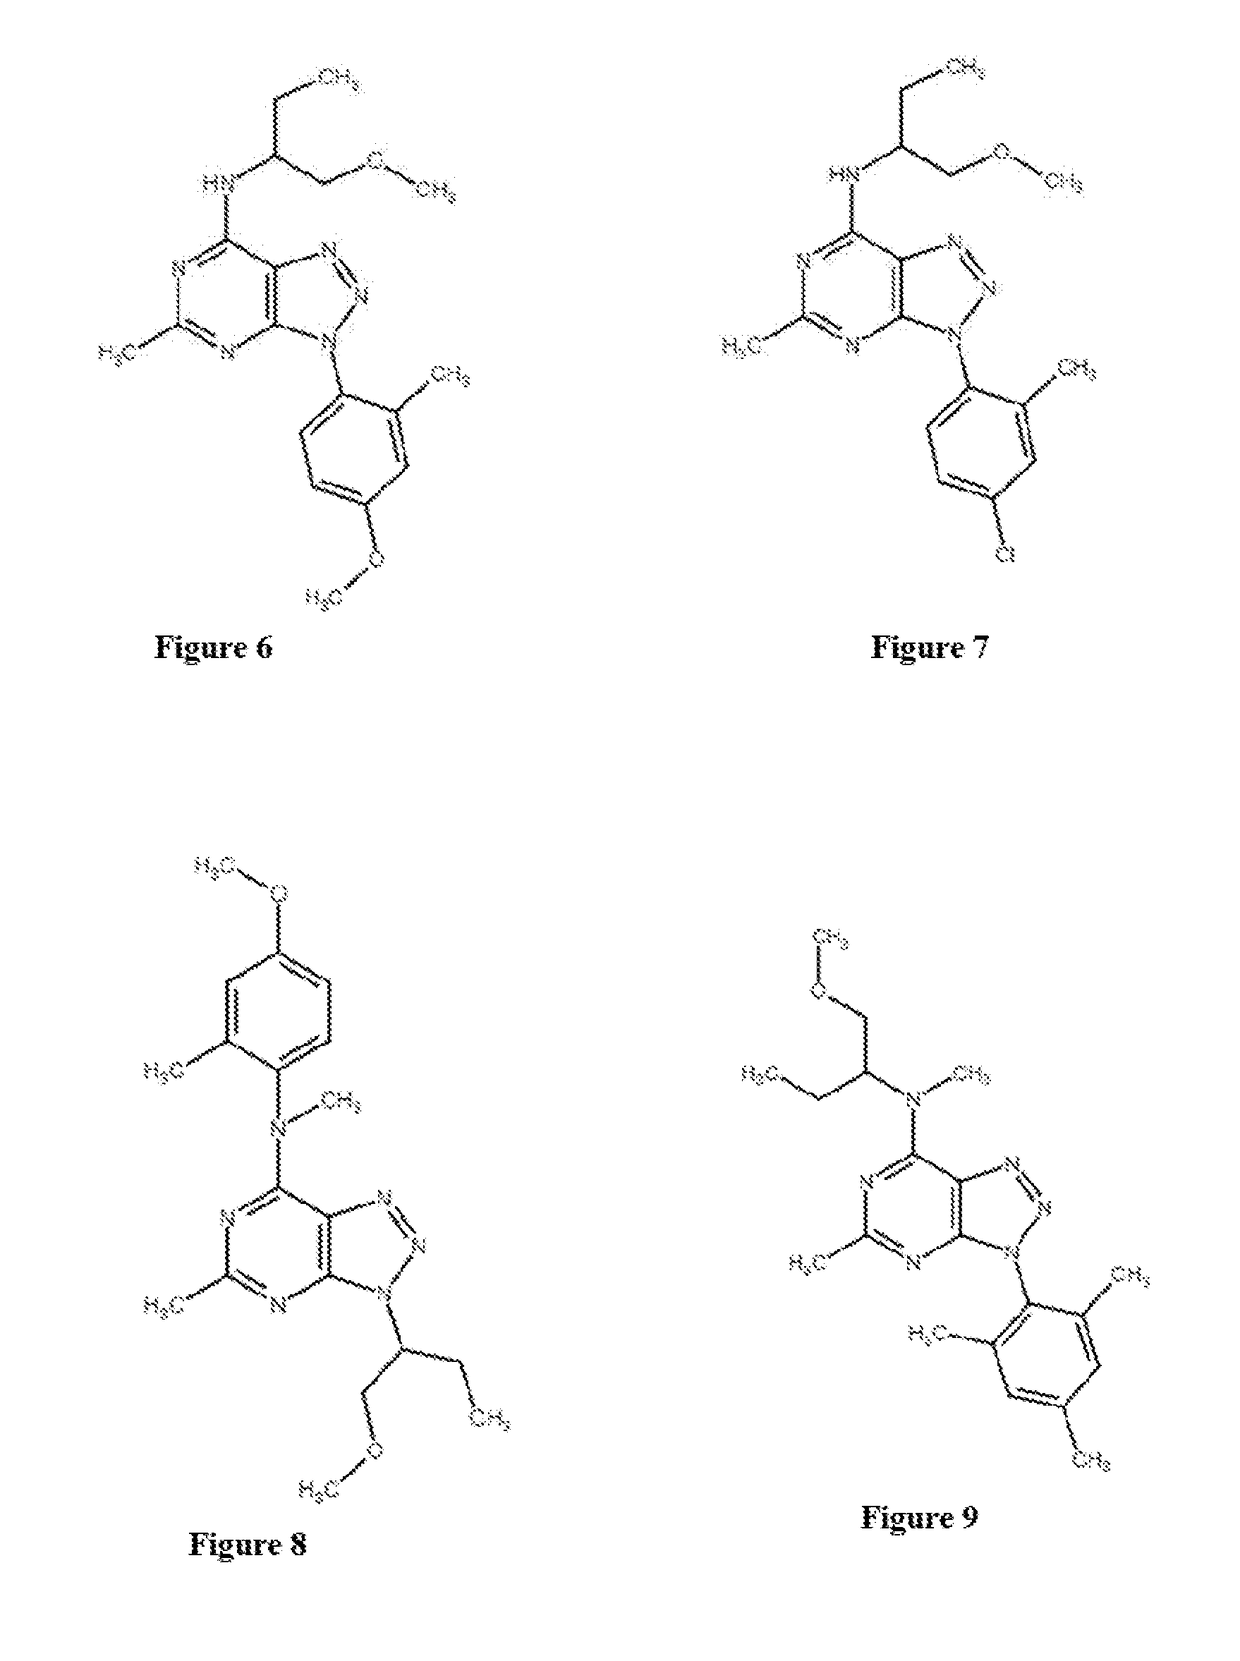 Triazolopyridines And Triazolopyrimidines That Lower Stress-Induced P-Tau